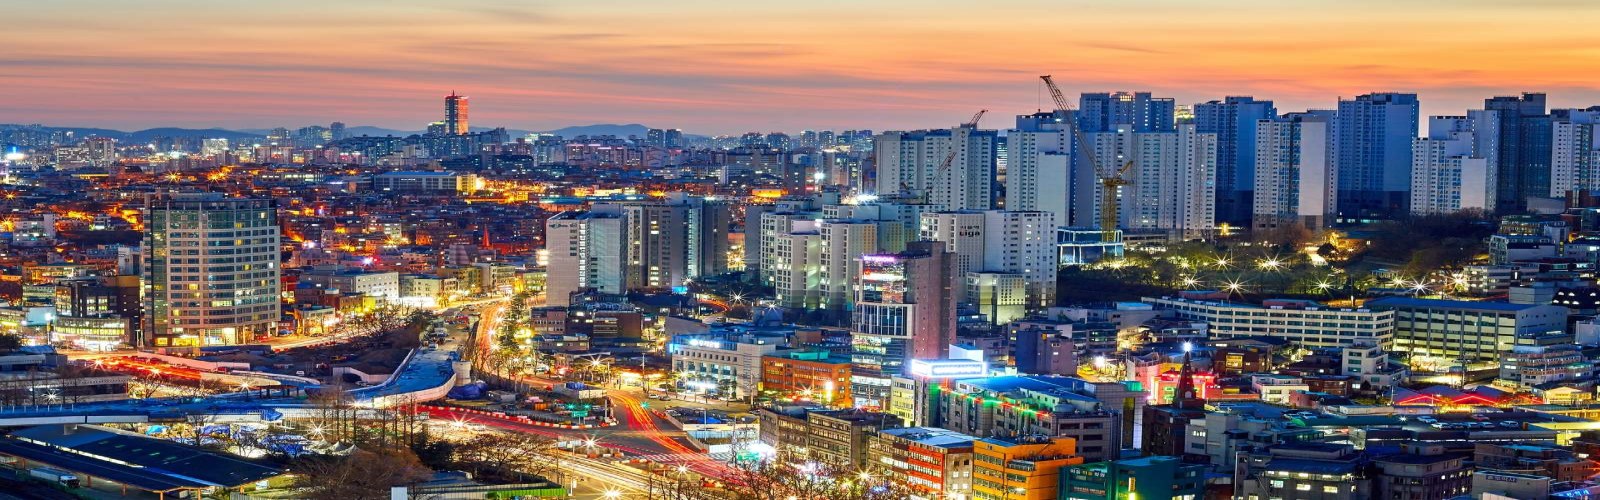 Korean smart cities & factories emerge through the clouds